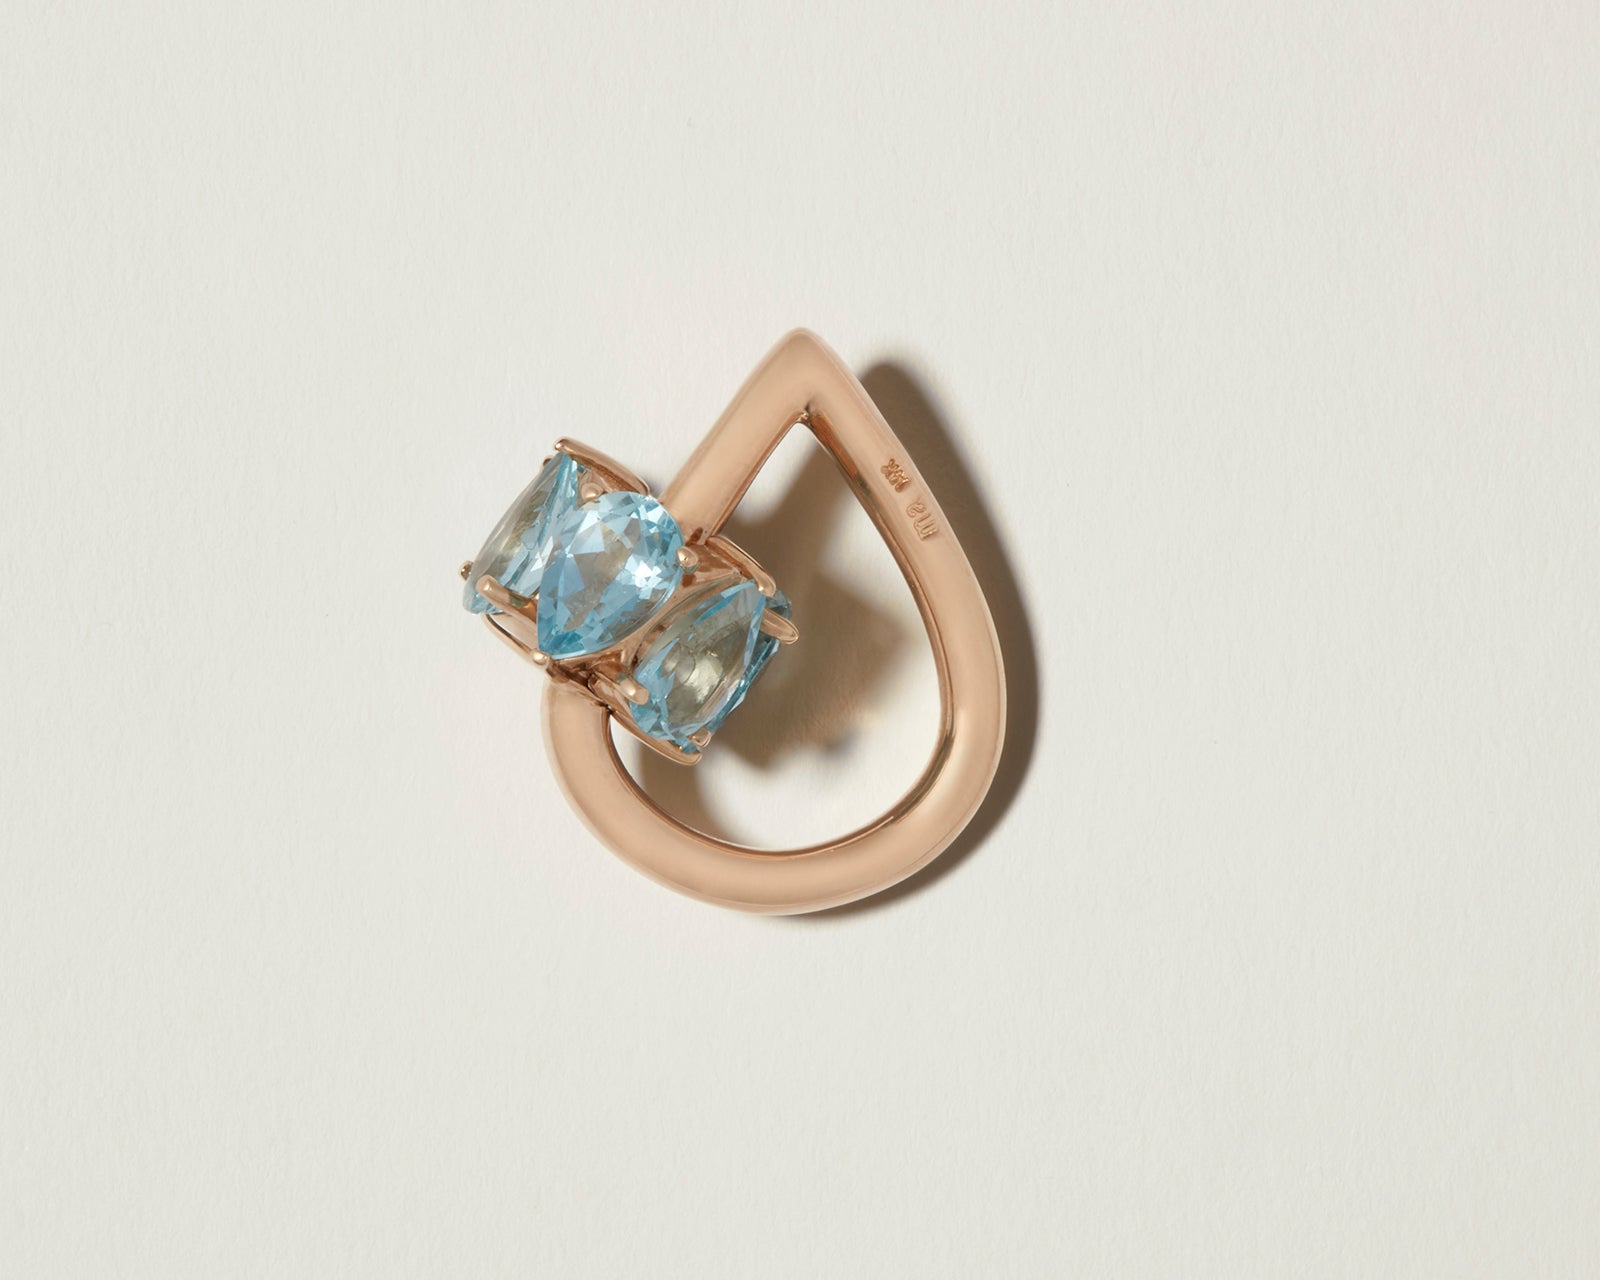 Gold droplock charm with blue gemstones